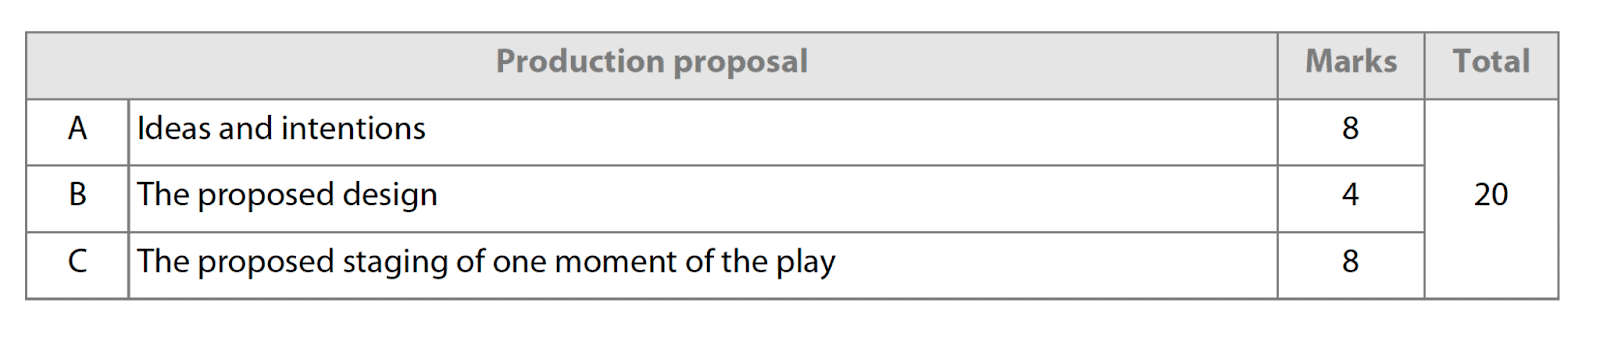 production proposal